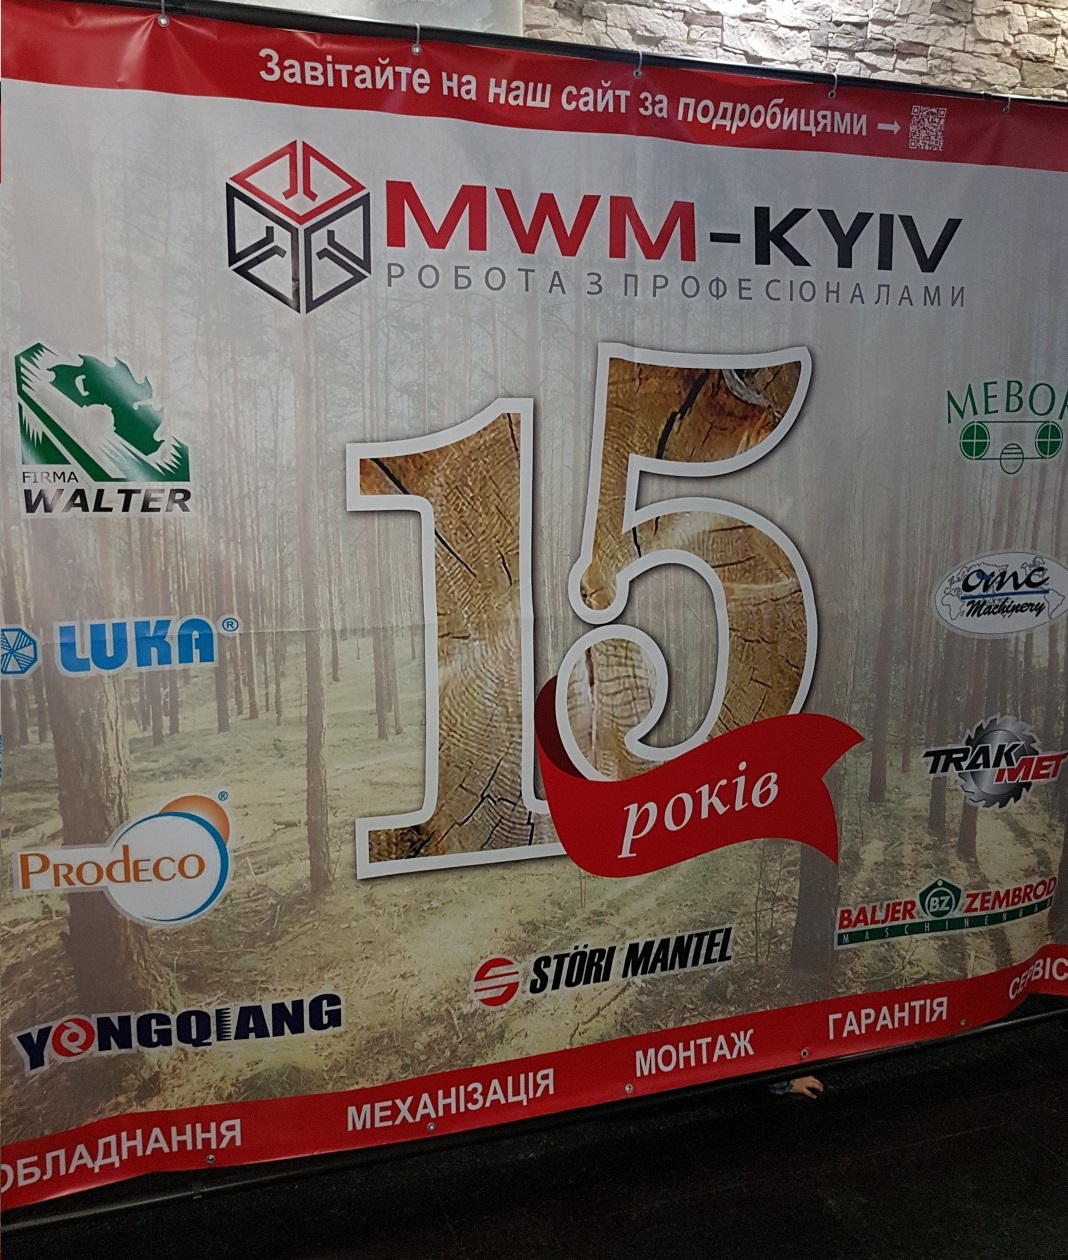 МВМ-Киев 15 -:)